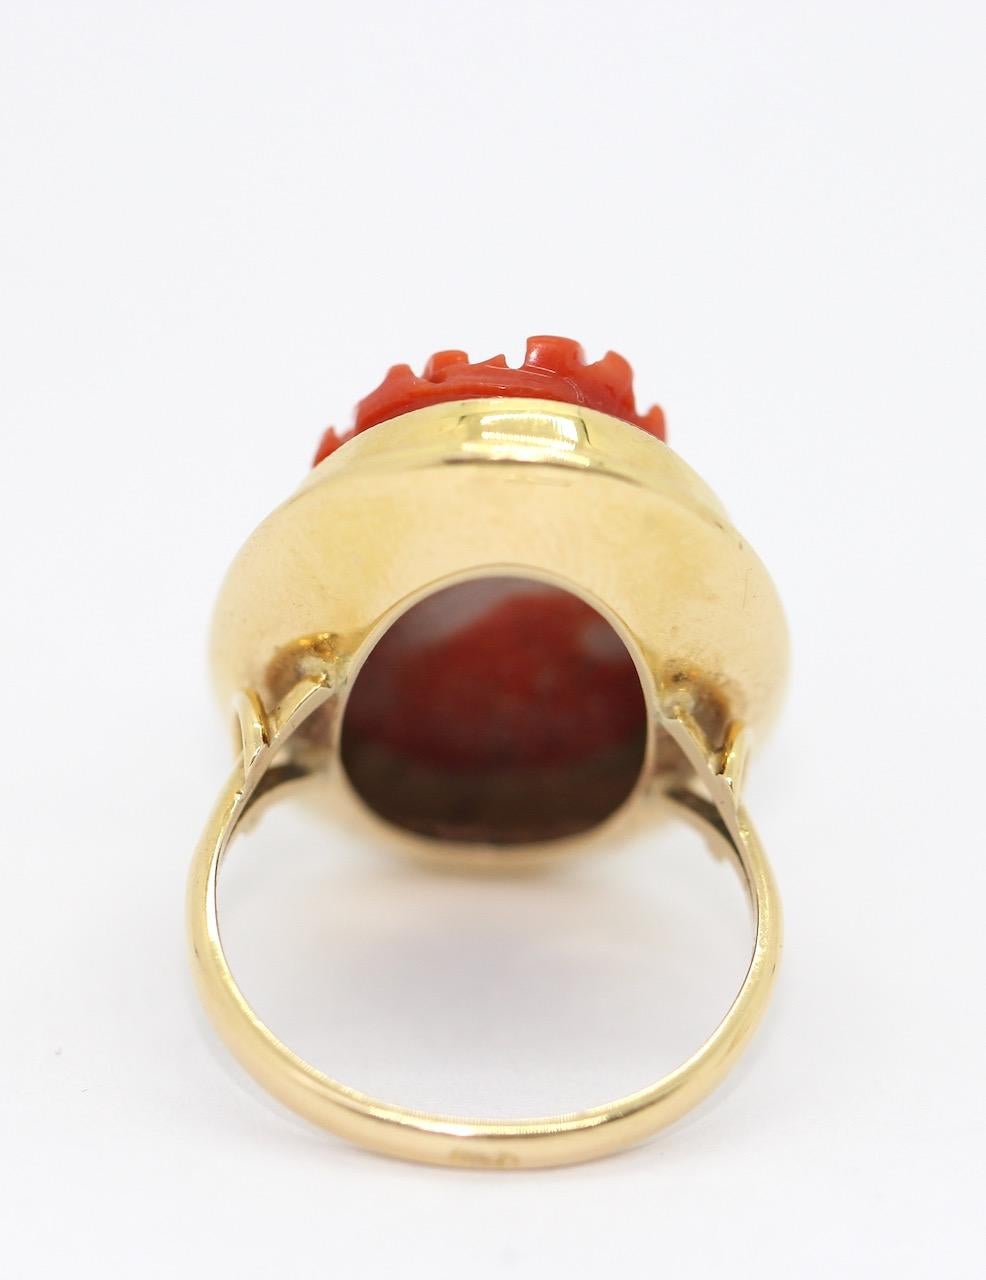 Antique Ring, Coral Cameo, 18 Karat Gold, Female Portrait For Sale 2